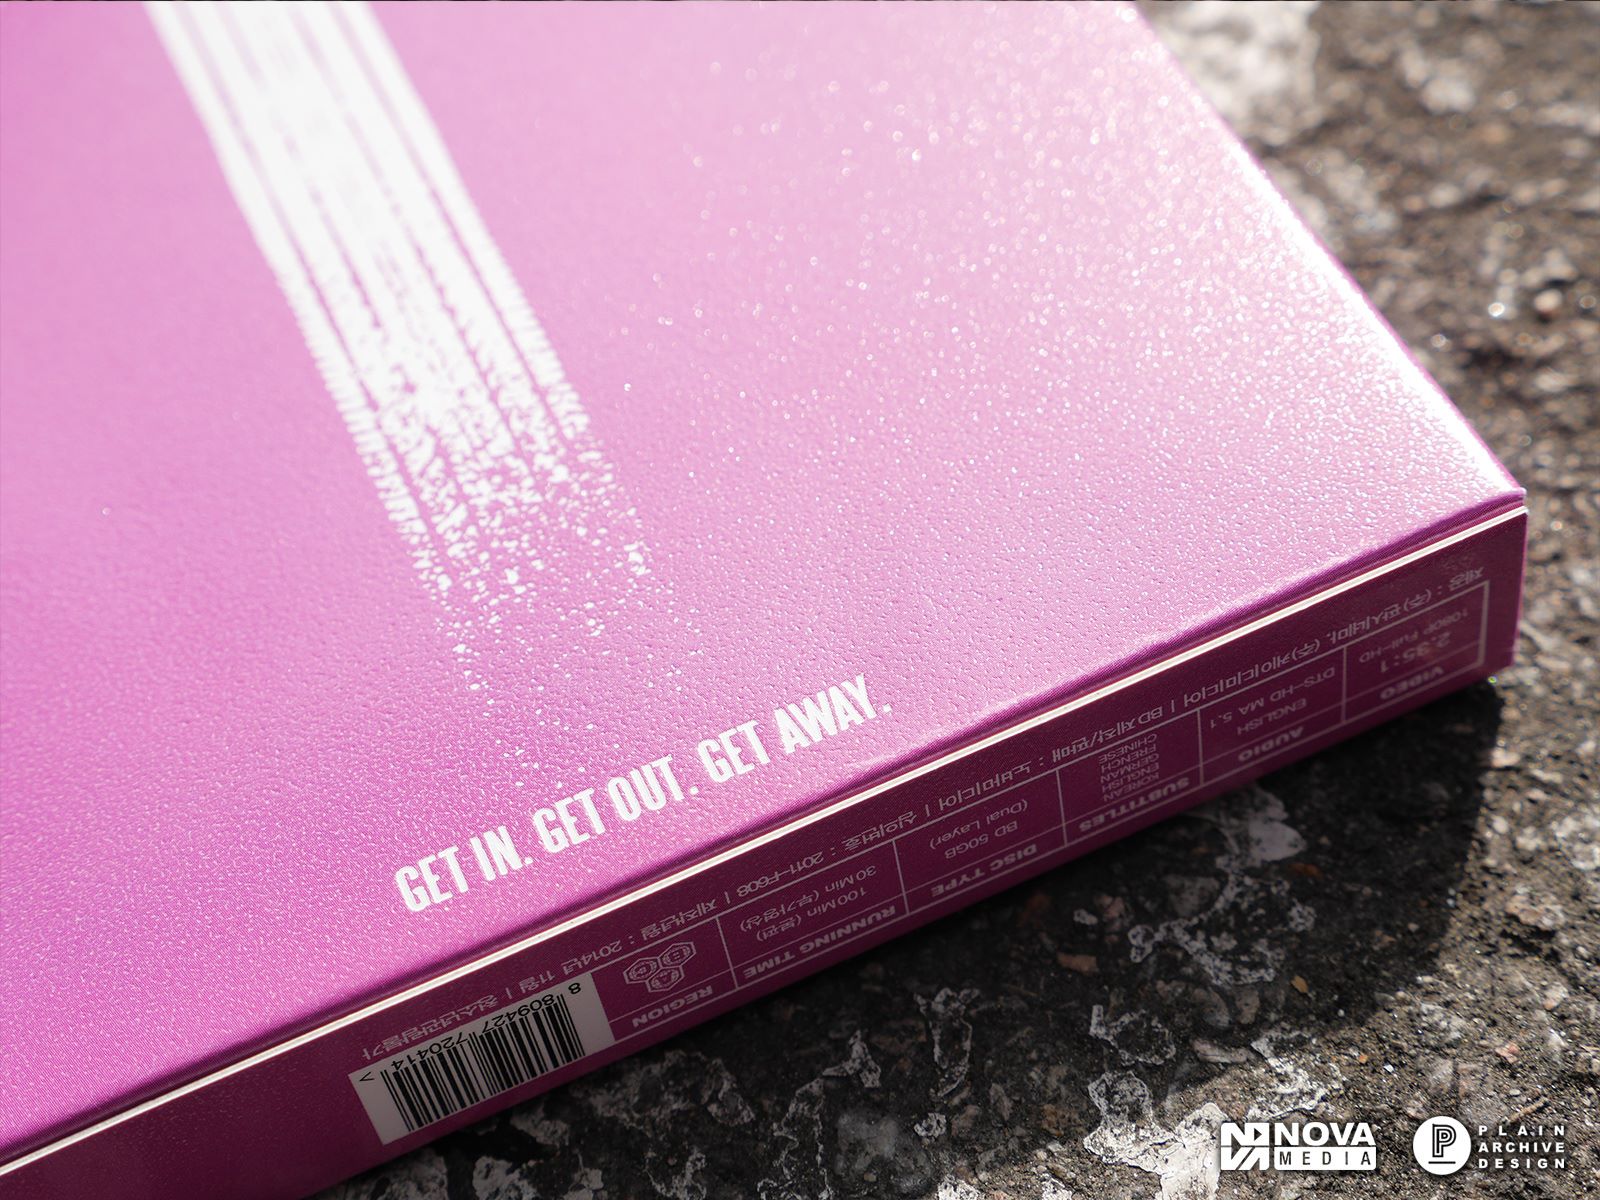 Drive (Blu-ray SteelBook) (Novamedia Exclusive #1) [Korea] | Hi 